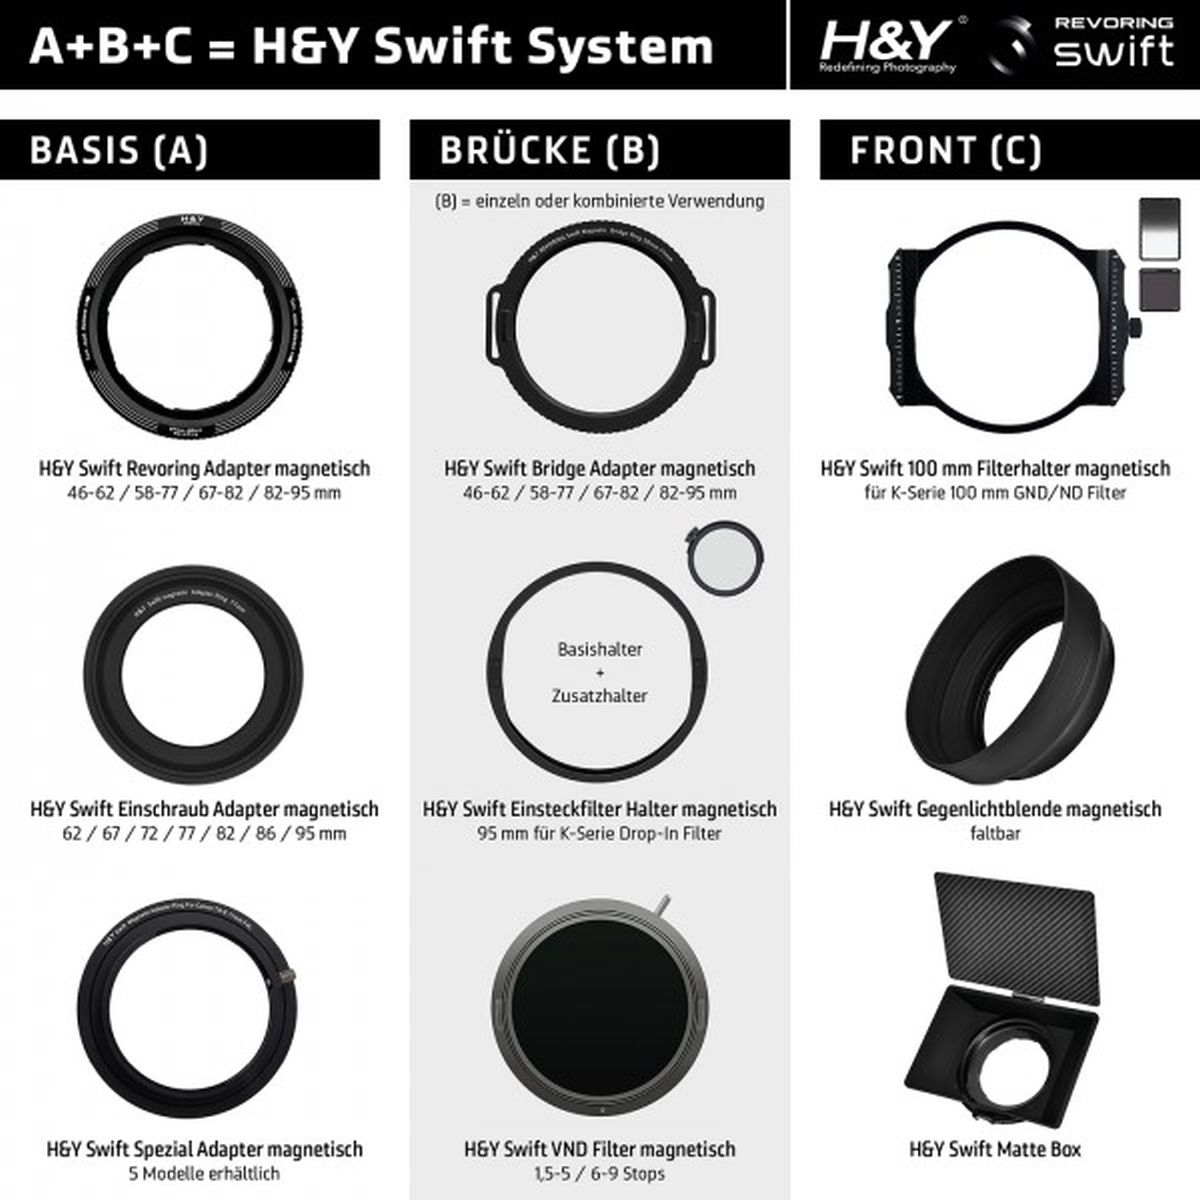 H&Y Swift A Revoring 82-95 mm Adapter magnetisch